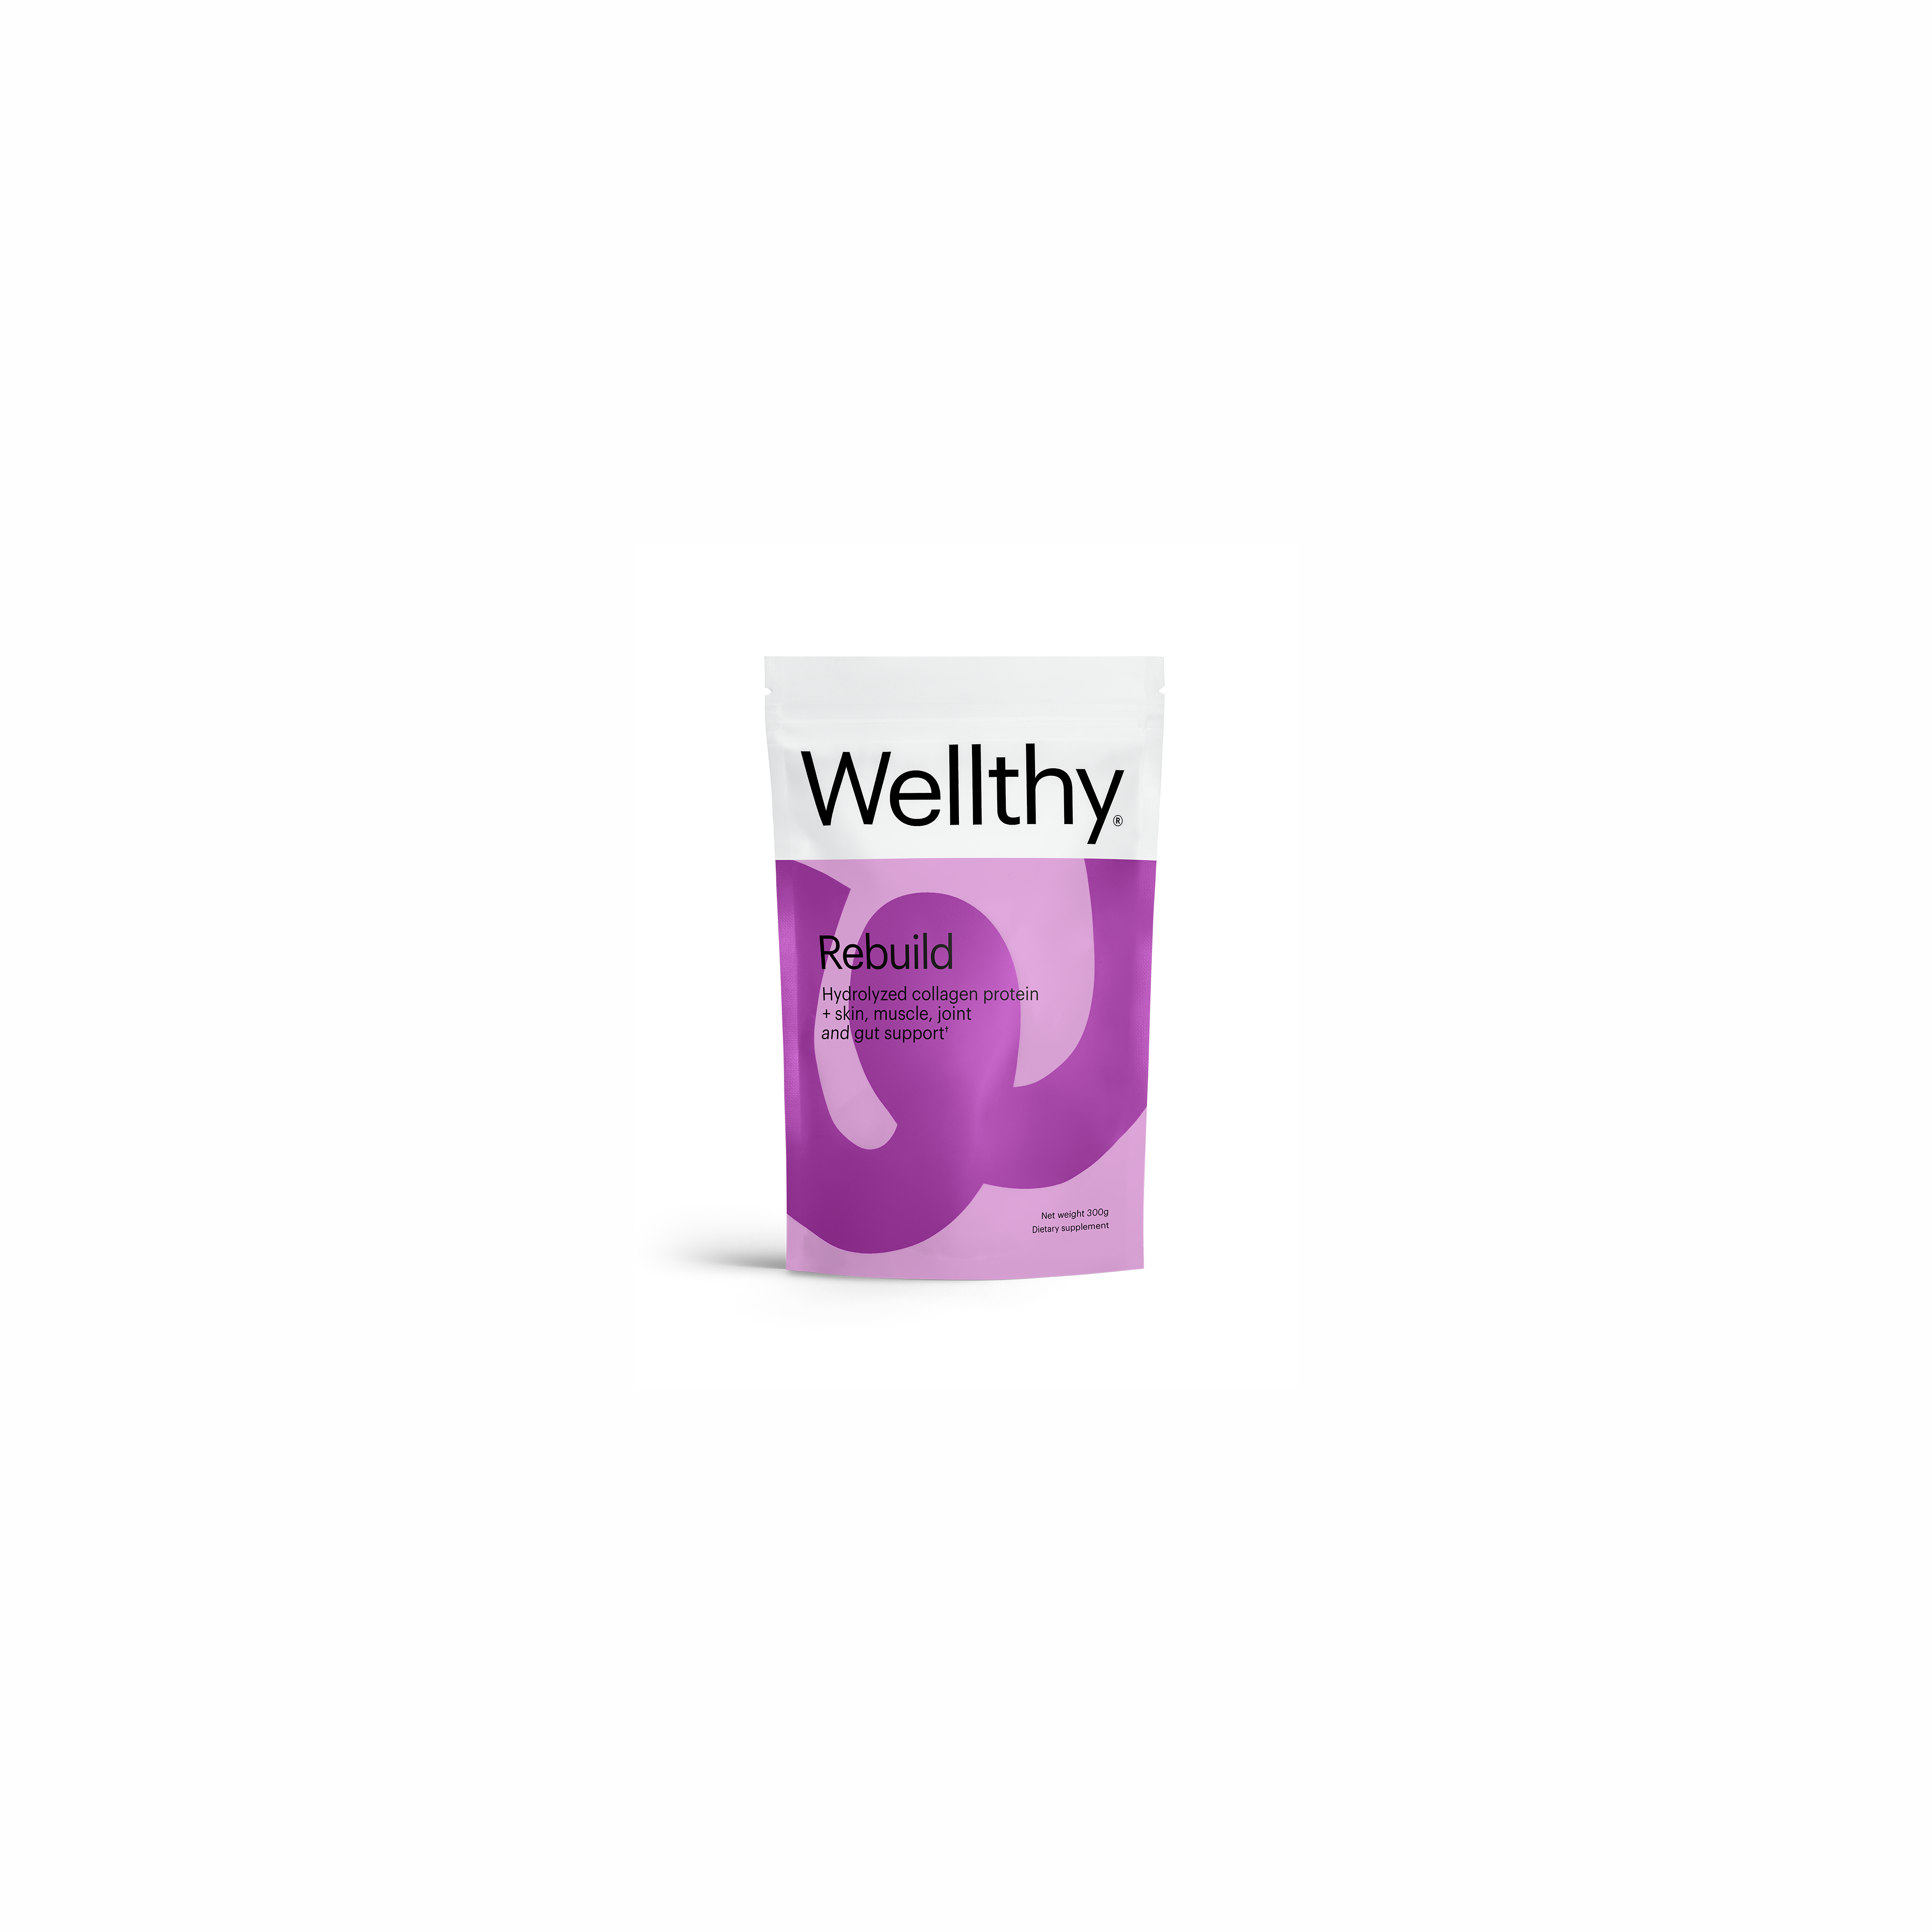 www.imwellthy.com/products/rebuild-hydrolyzed-collagen-protein